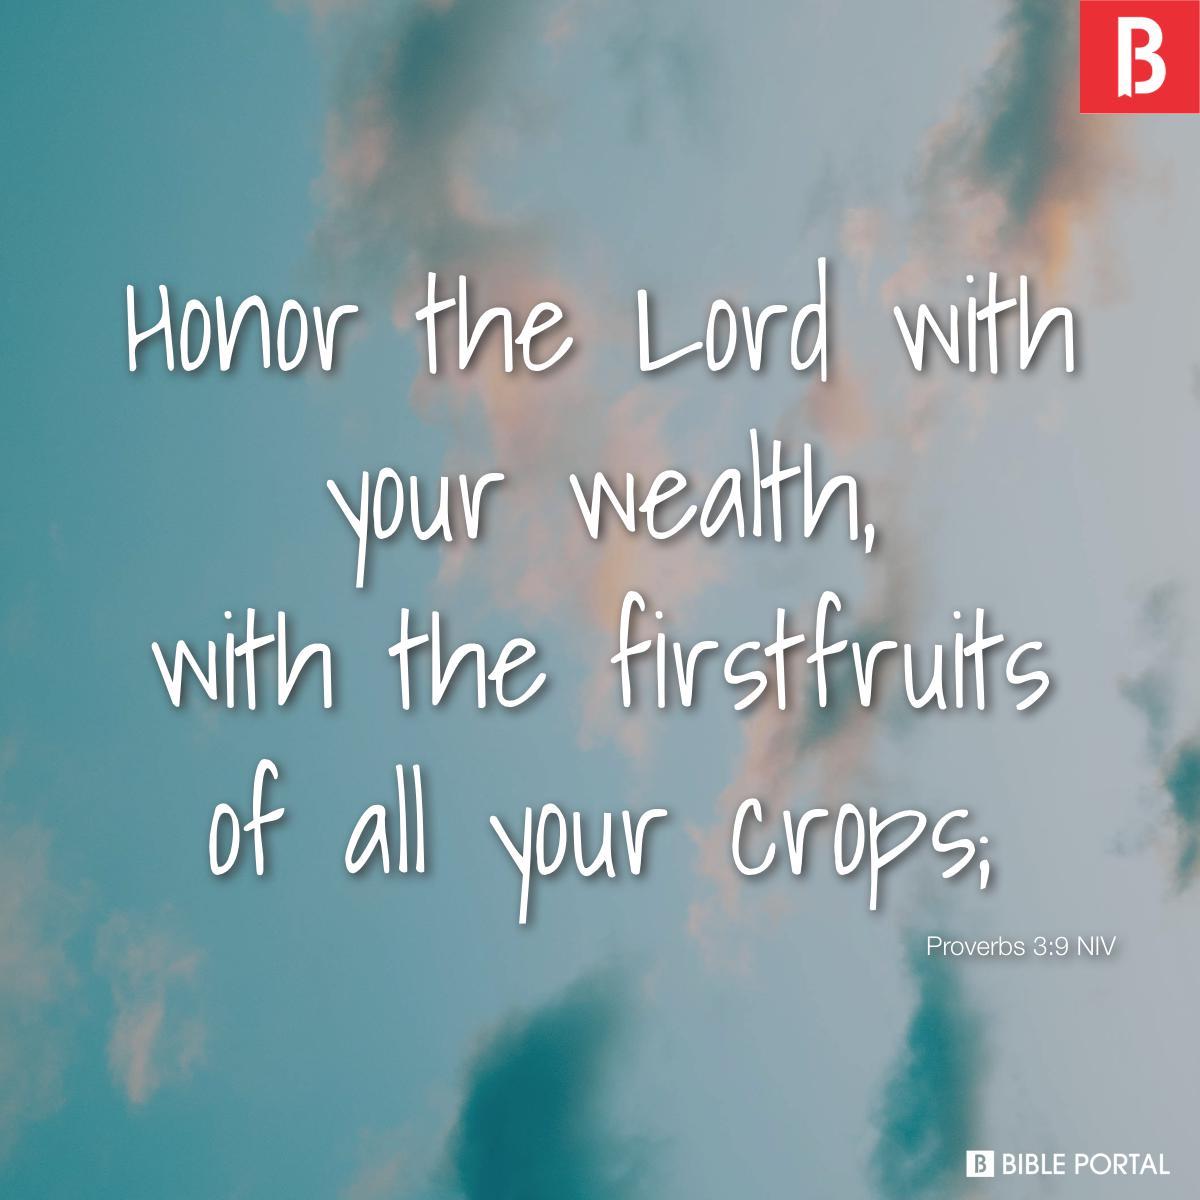 Proverbs 3:9 NIV